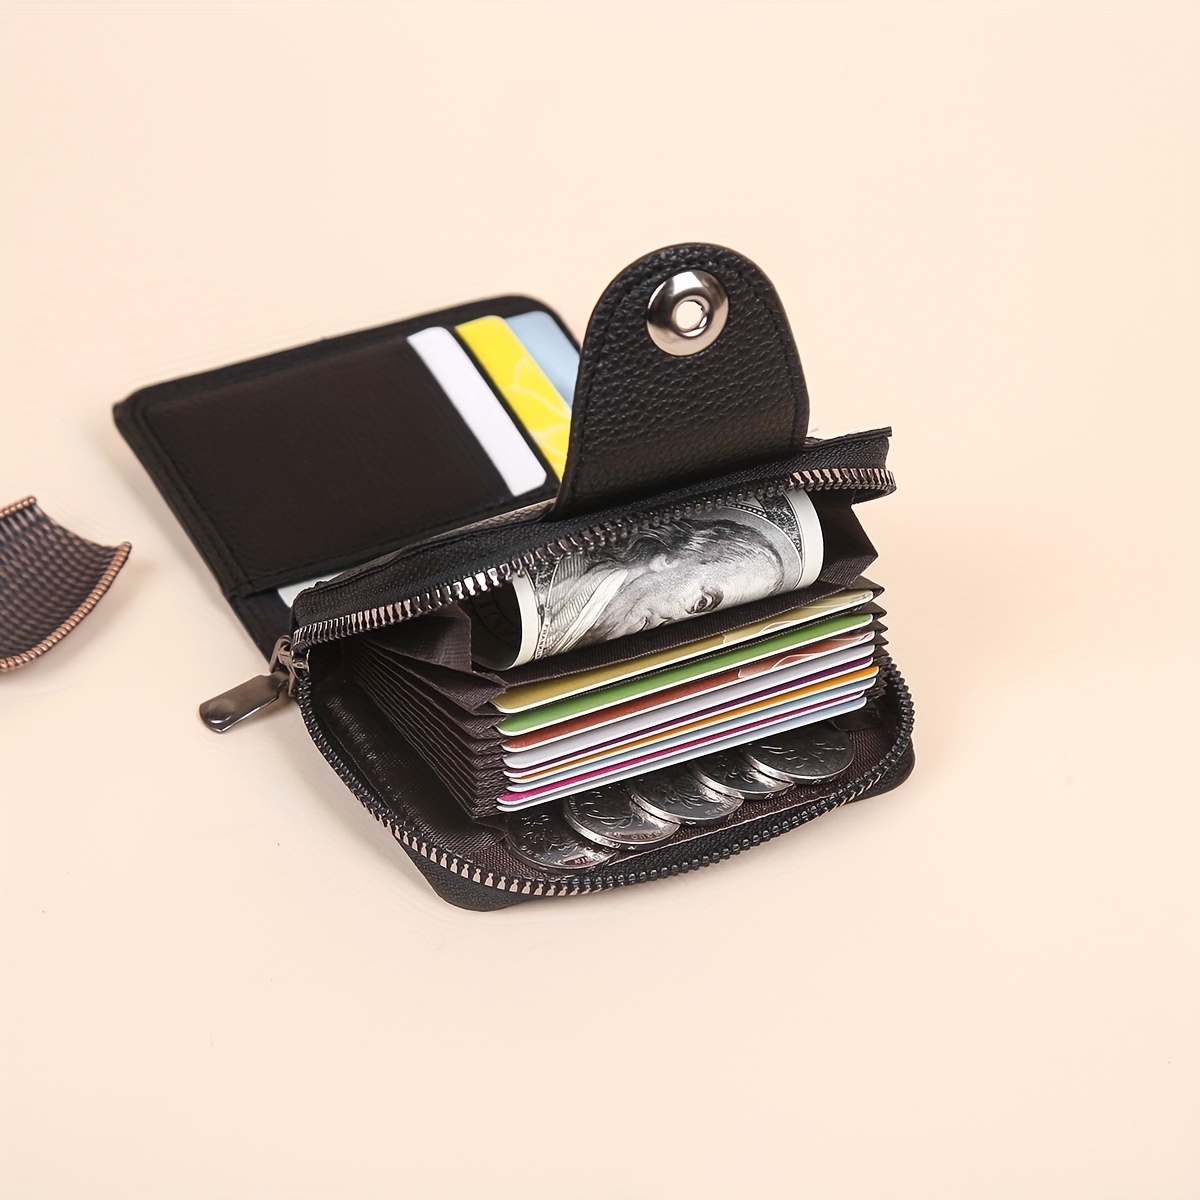 Luxury Designer Men Wallet Genuine Leather Bifold Short Wallets Male Hasp  Vintage Purse Coin Pouch Multi-functional Cards Pocket